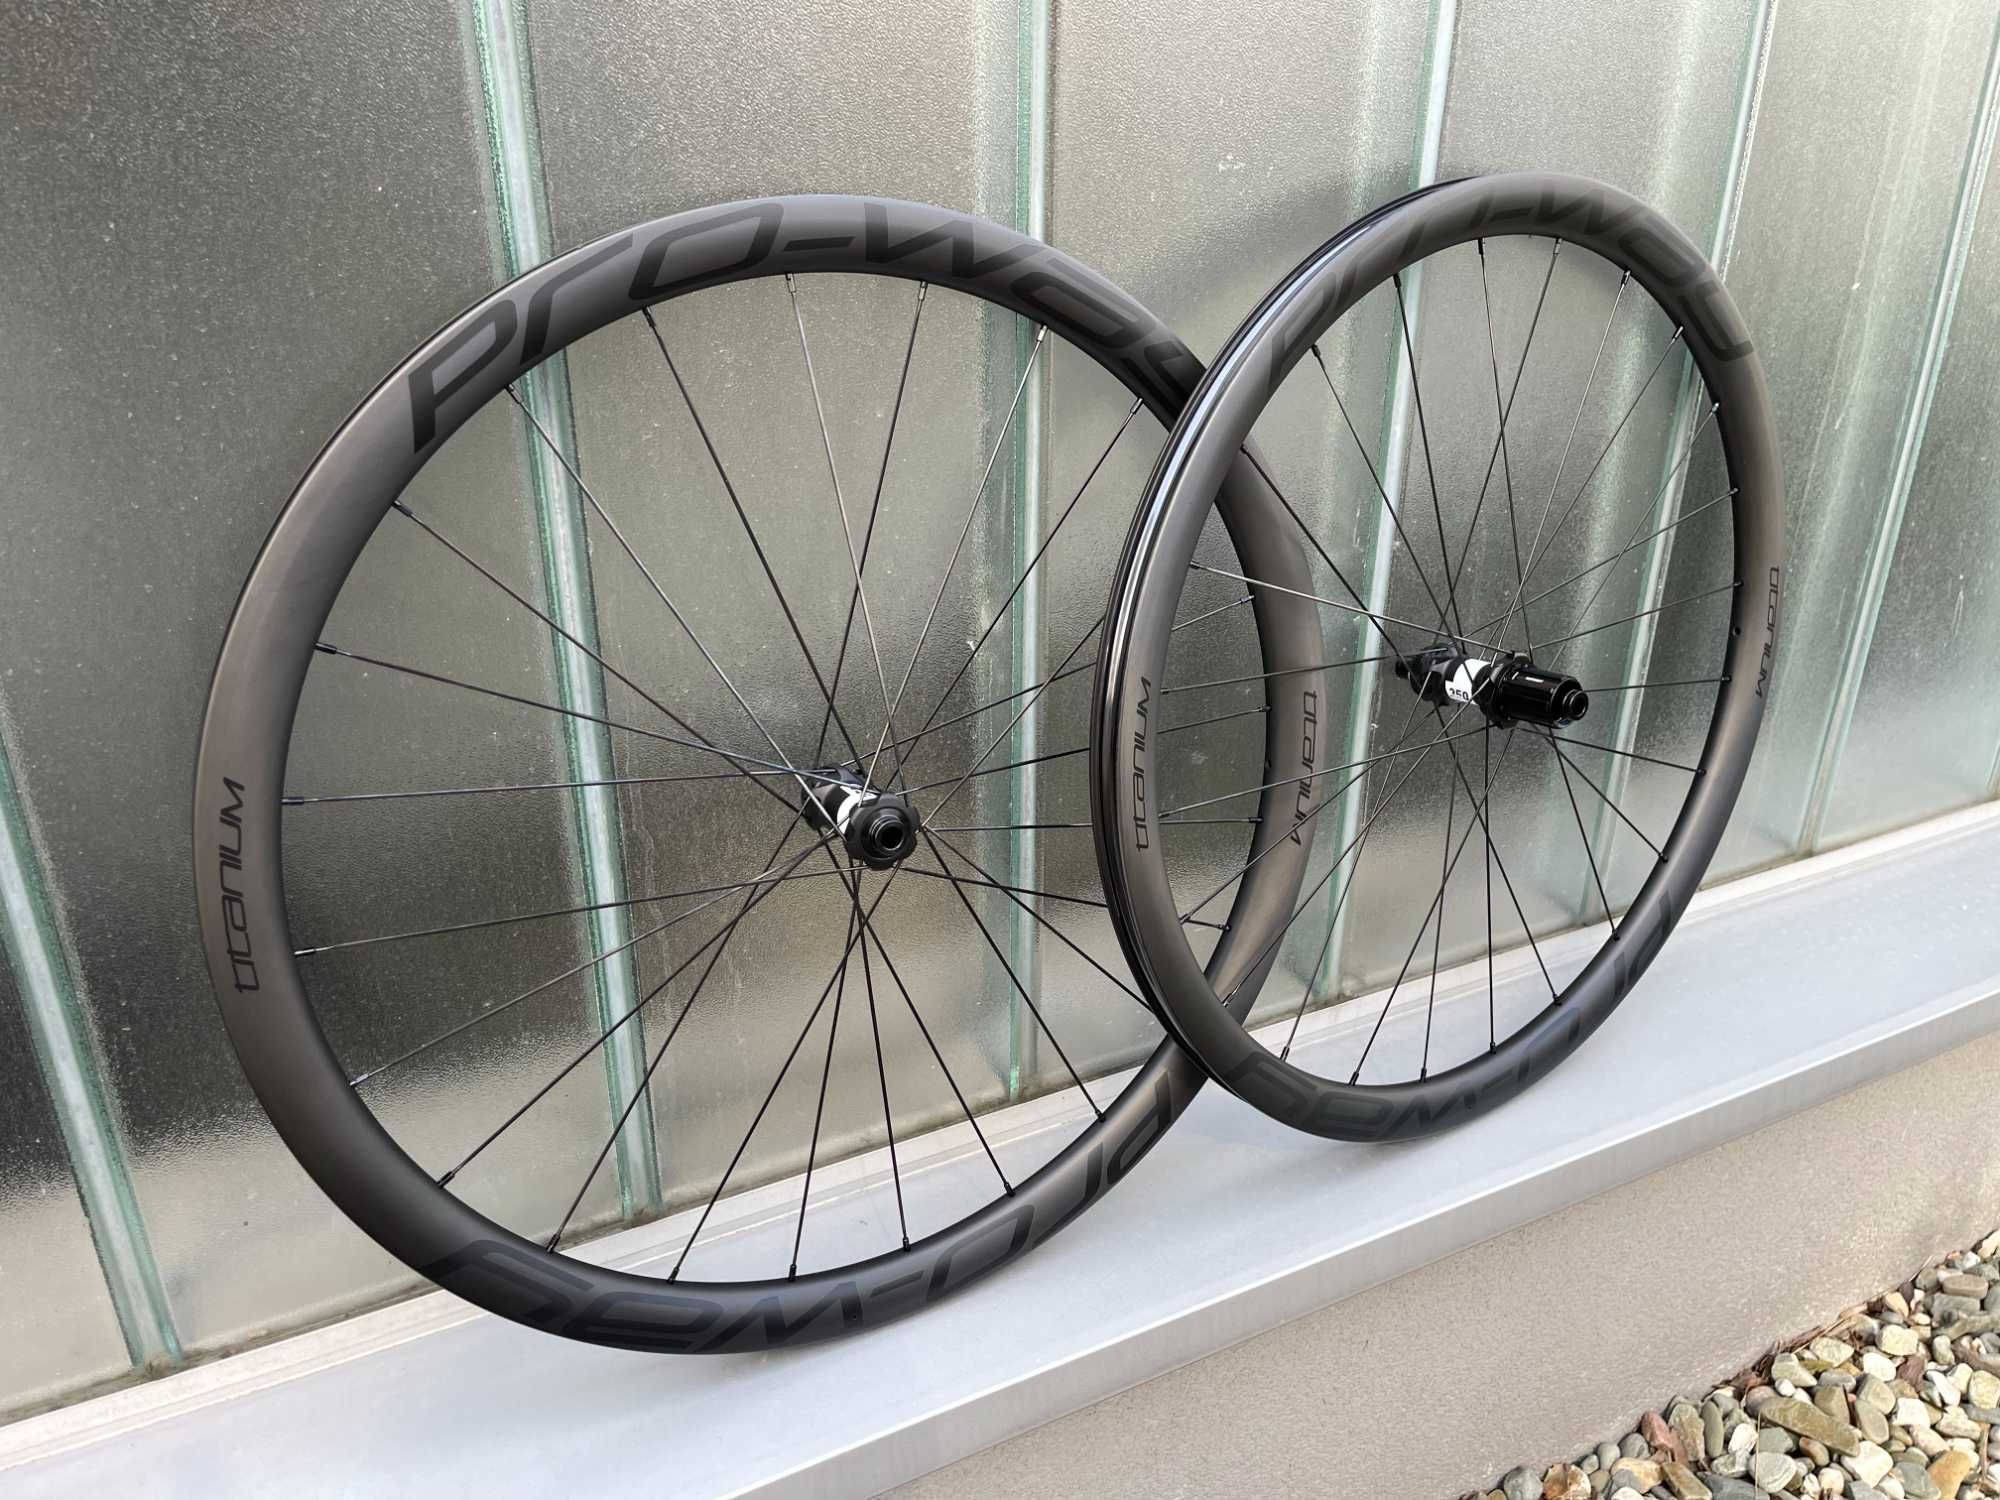 Koła szosowe carbon PRO-WAY TITANIUM 35mm 1295g! disc (rower karbonowe